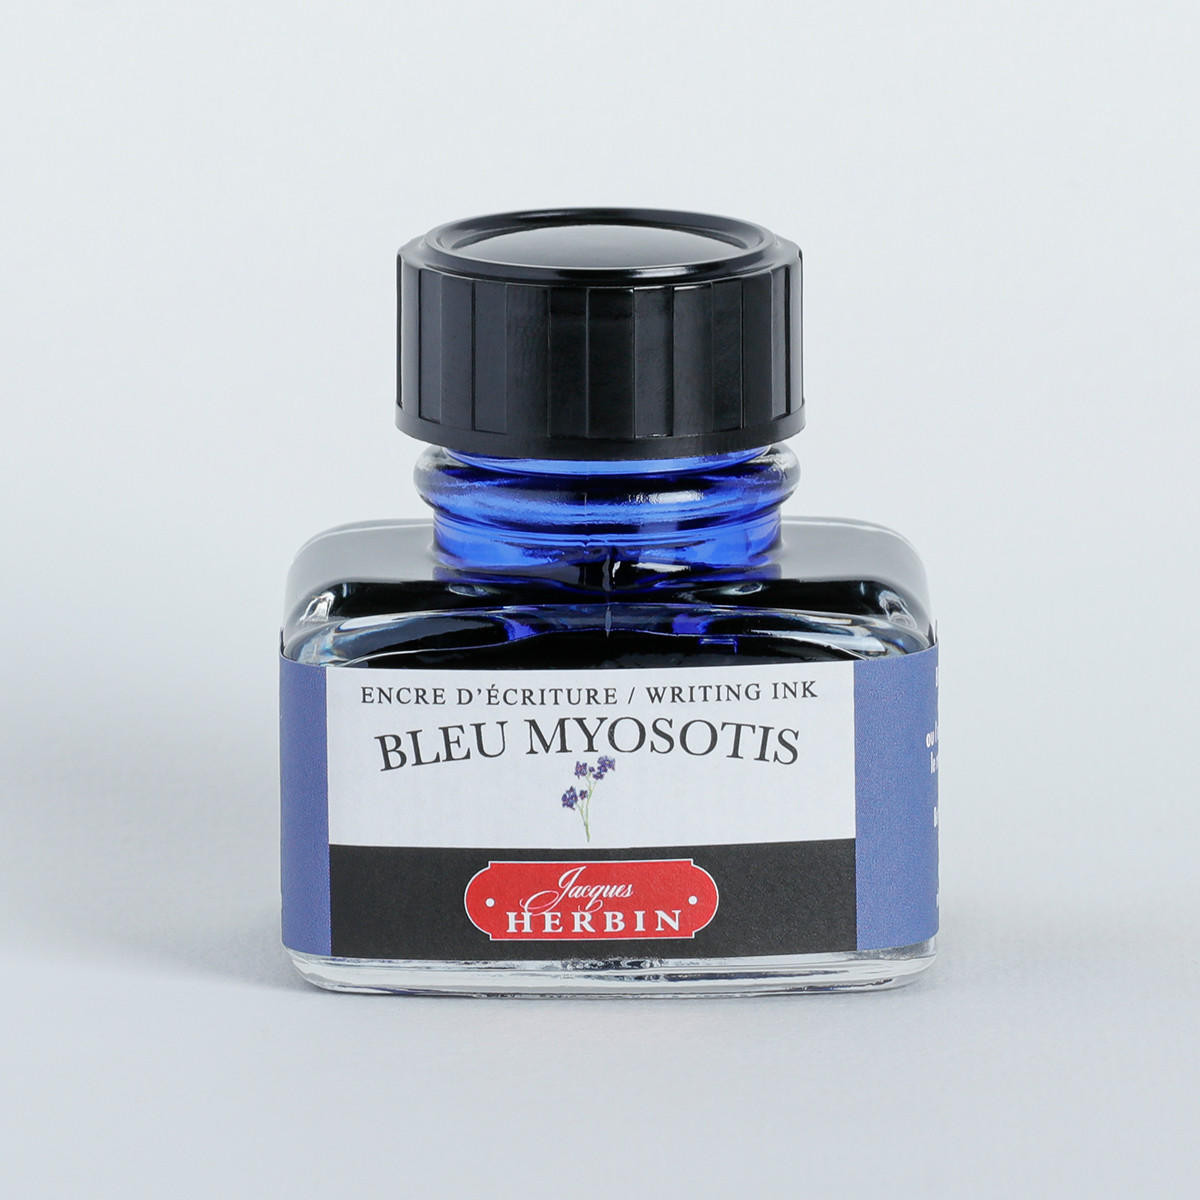 Herbin ’D’ Writing and Drawing Ink 30ml Bleu Myosotis